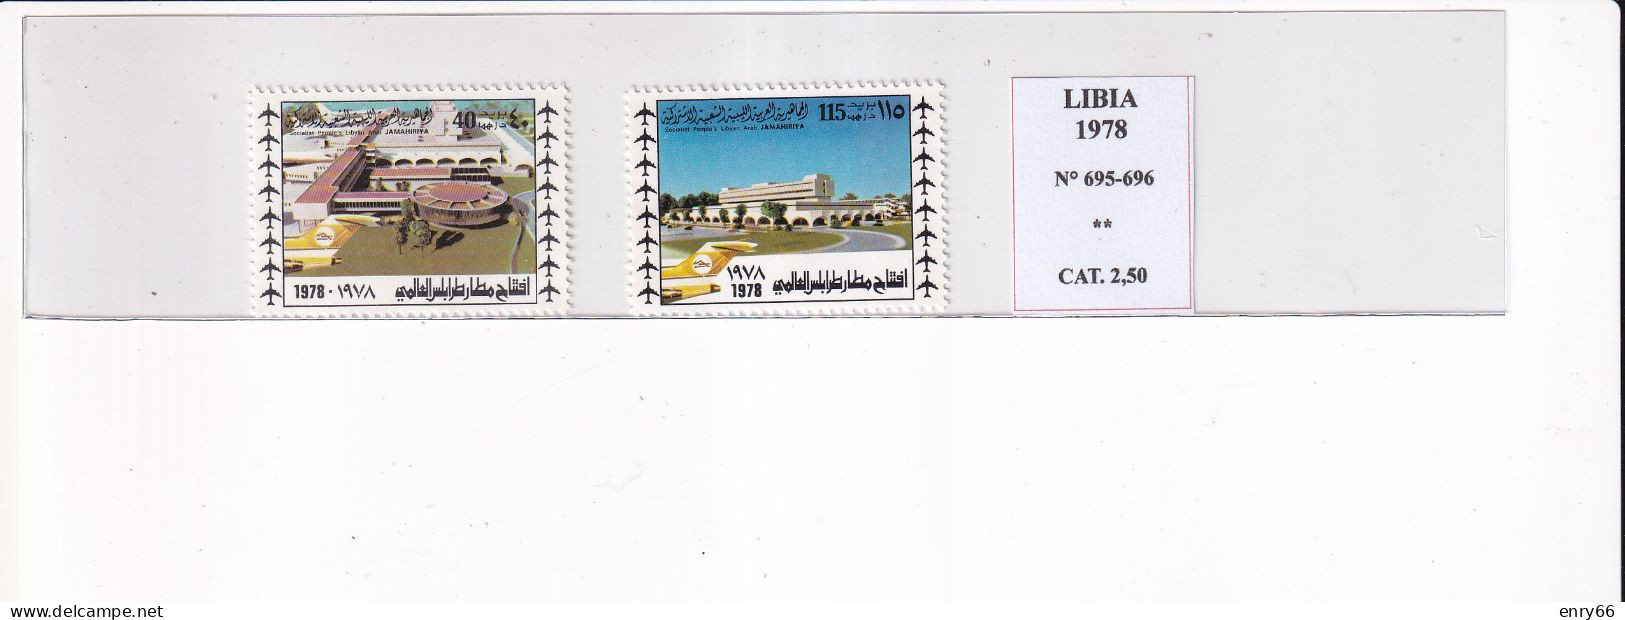 LIBIA 1978 N°695-696 MNH - Libia